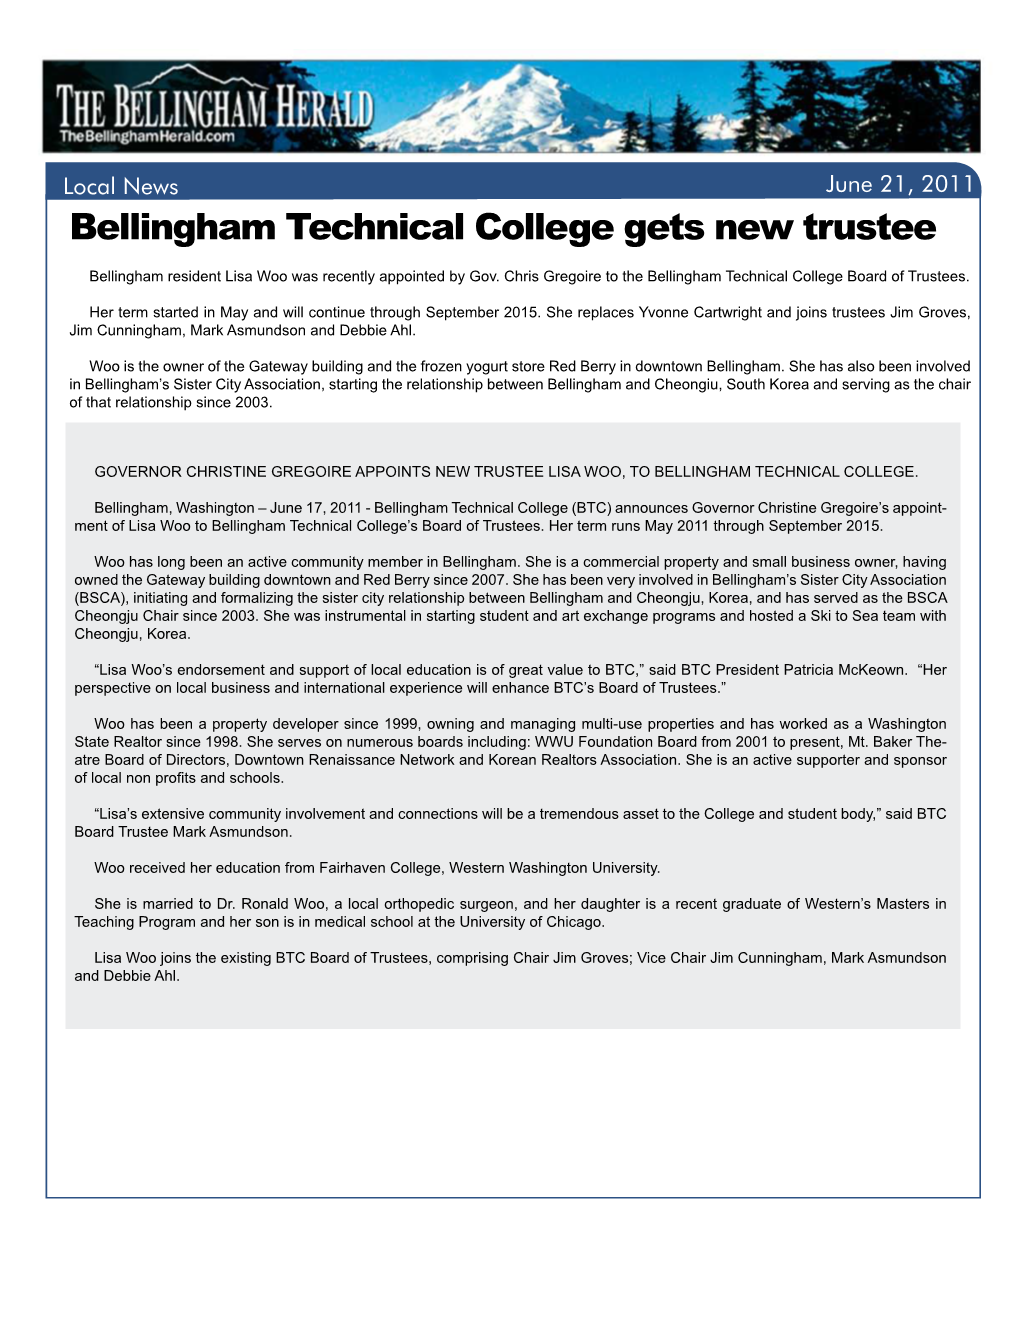 Bellingham Technical College Gets New Trustee